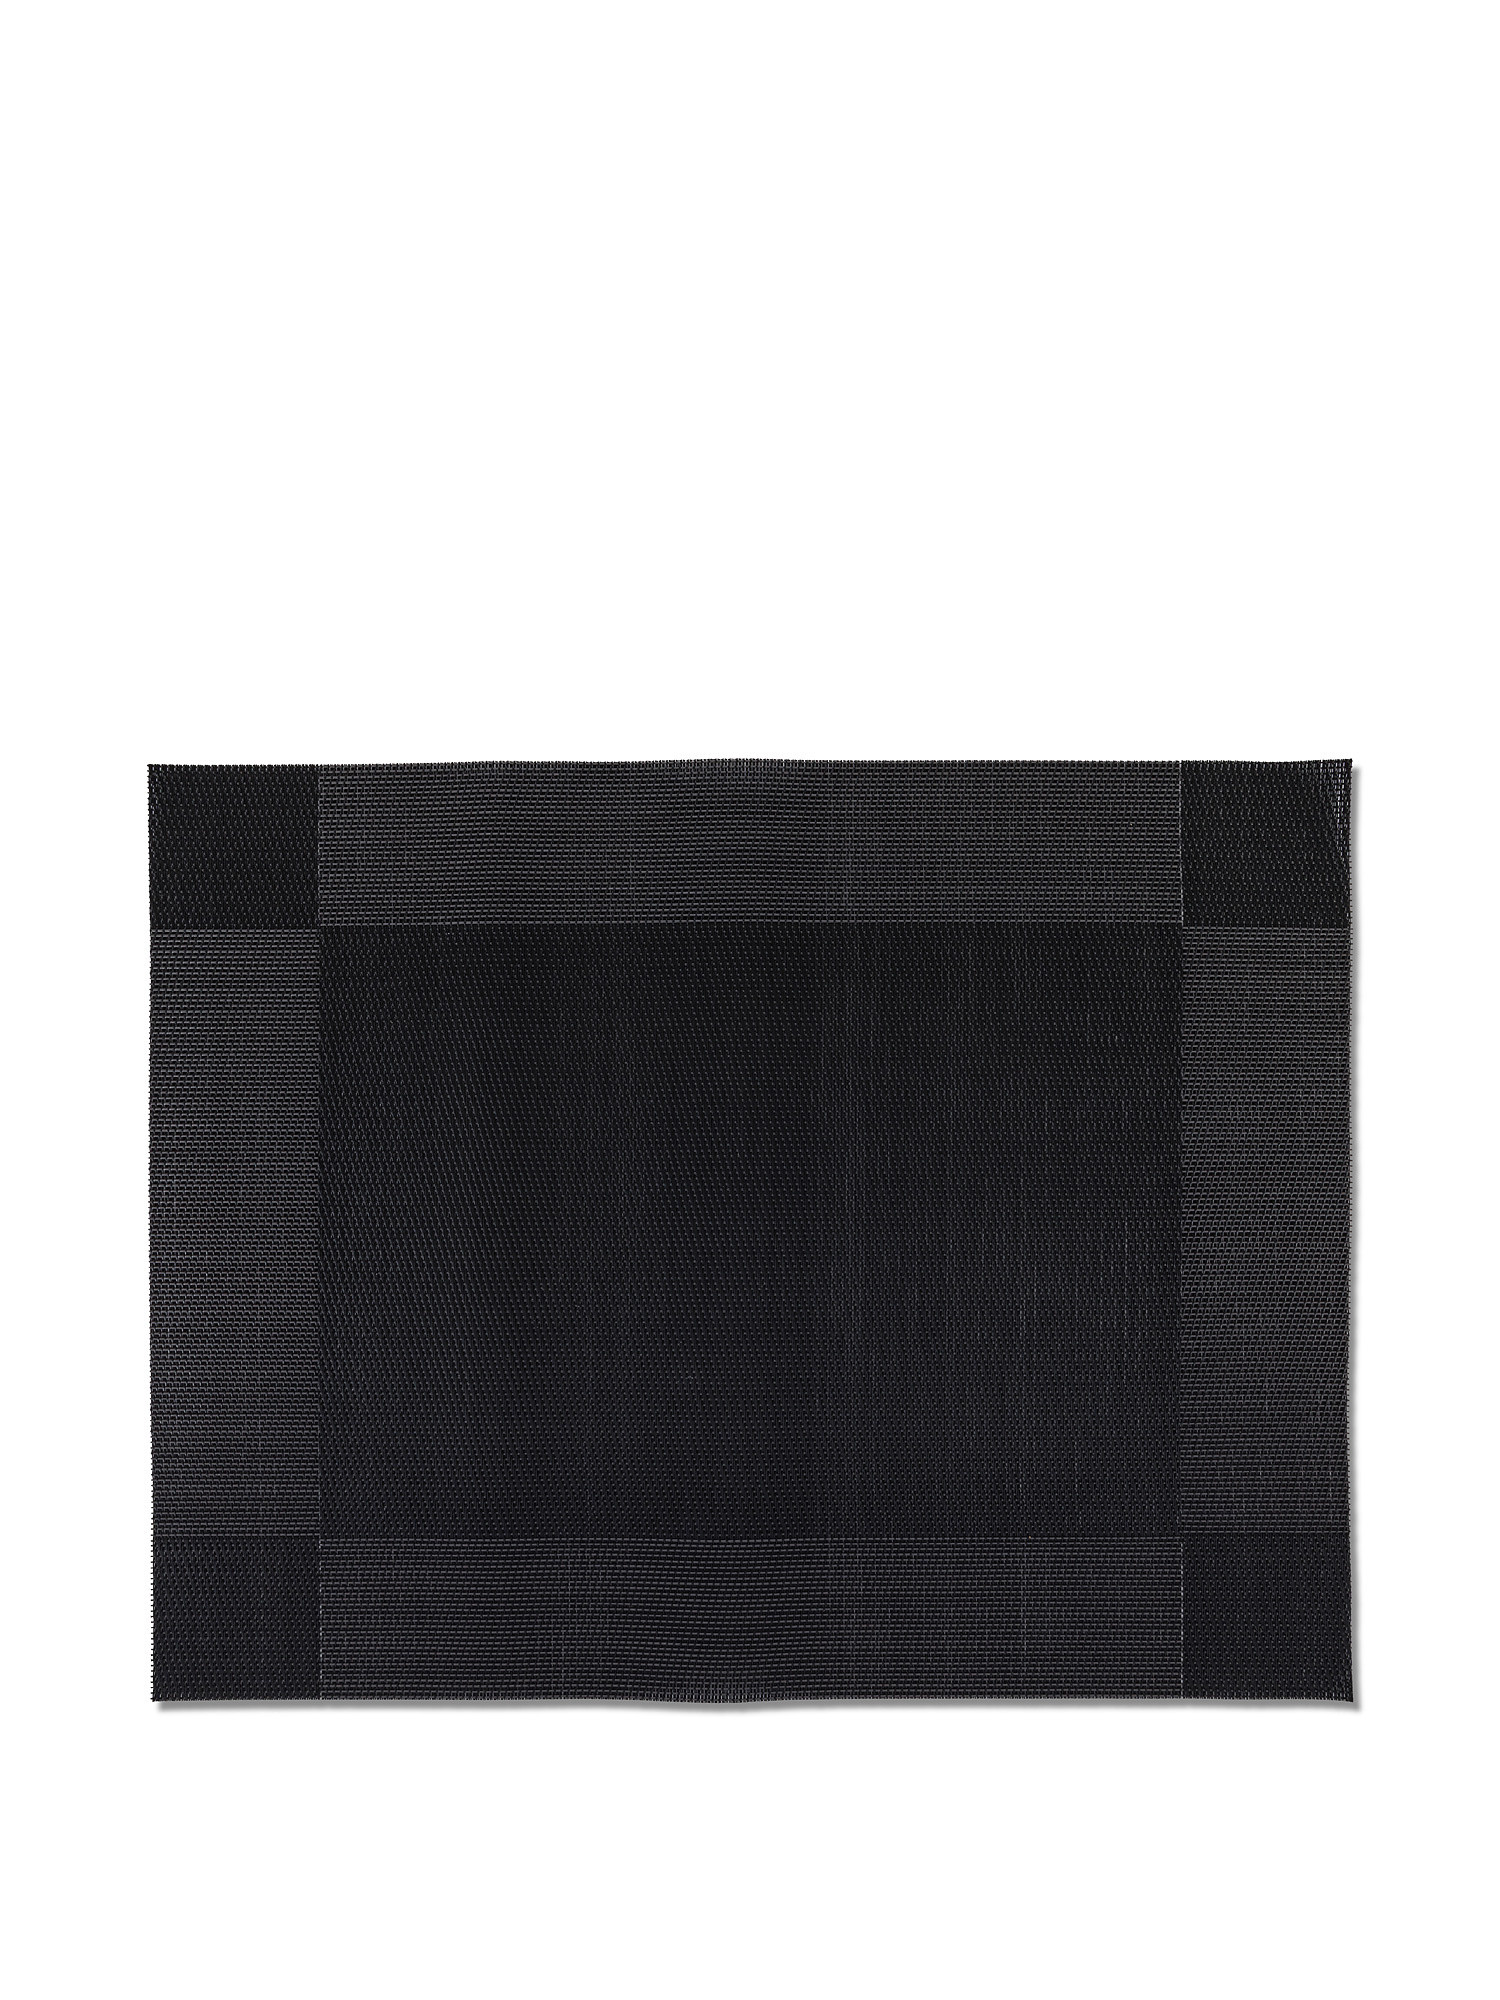 Tovaglietta PVC cornice, Black, large image number 0